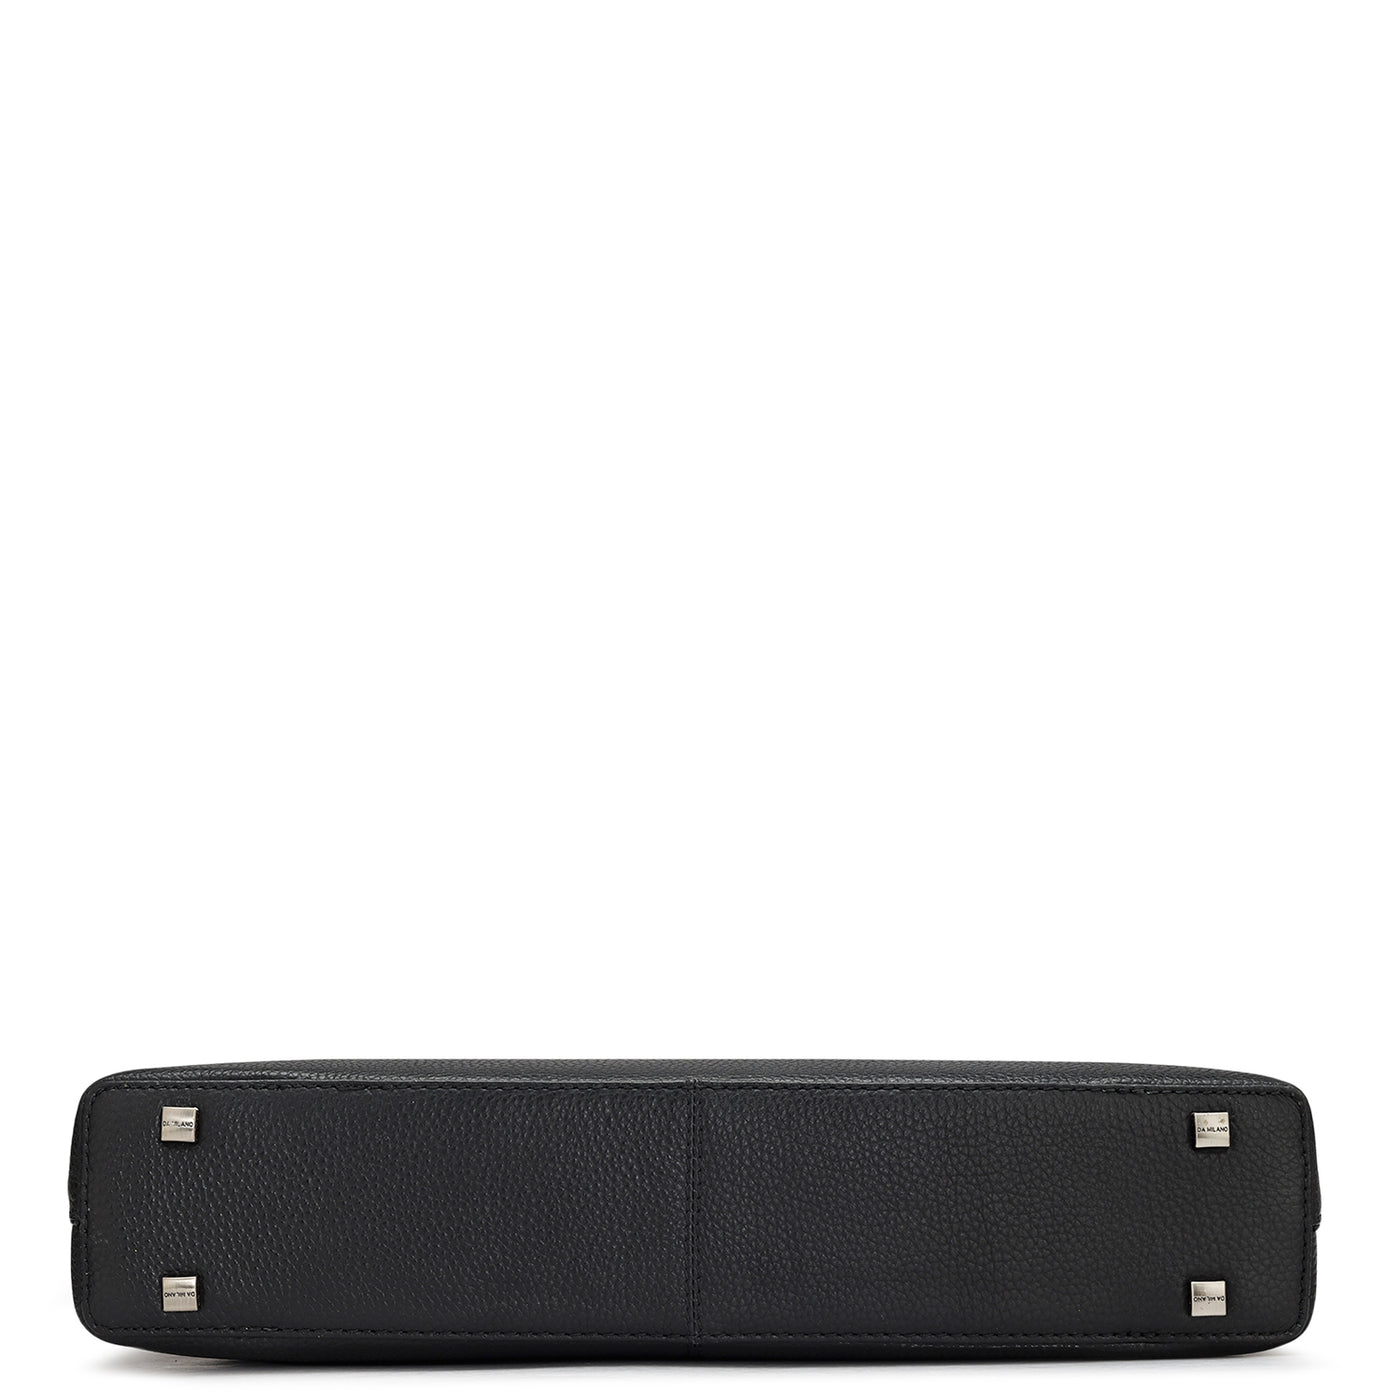 Black Wax Leather Laptop Bag - Upto 15"